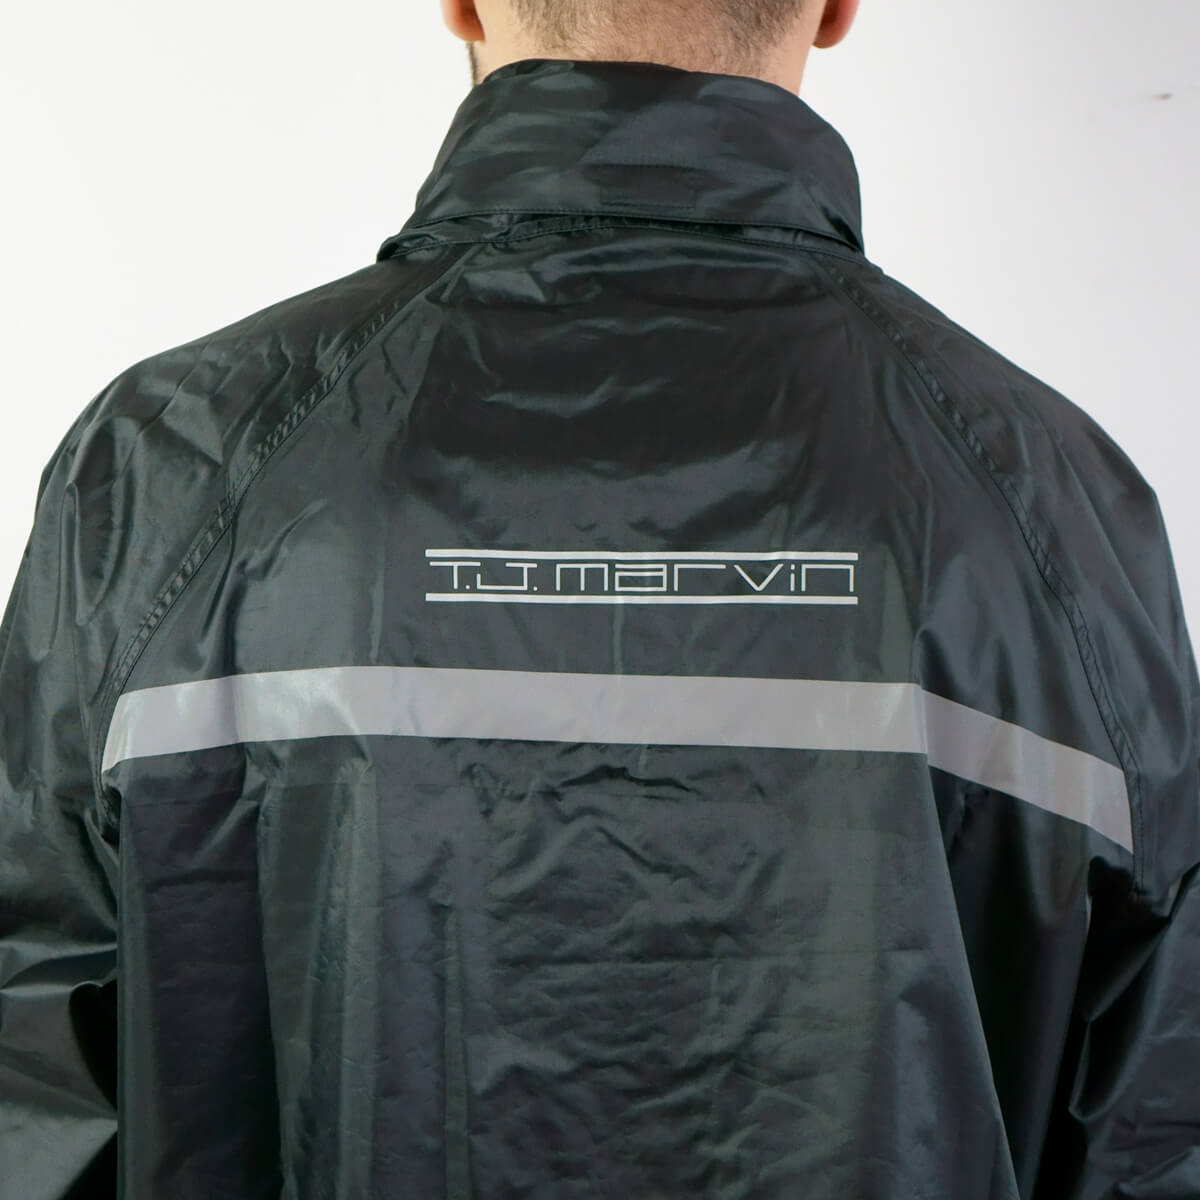 Waterproof Rainwear Set (Jacket + Pants)